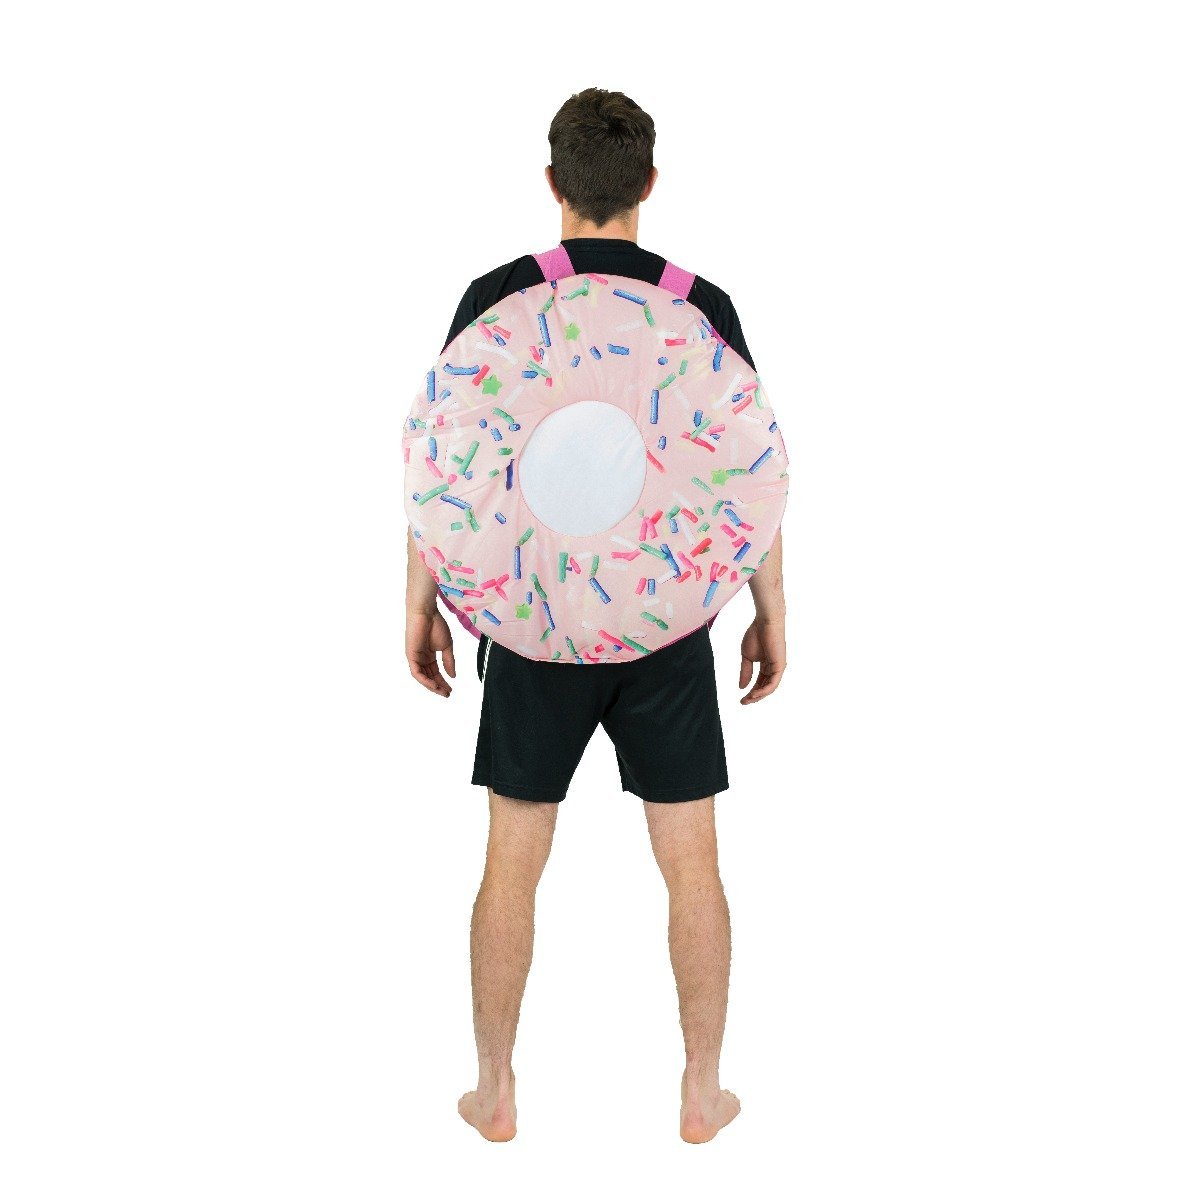 Bodysocks - Donut Costume